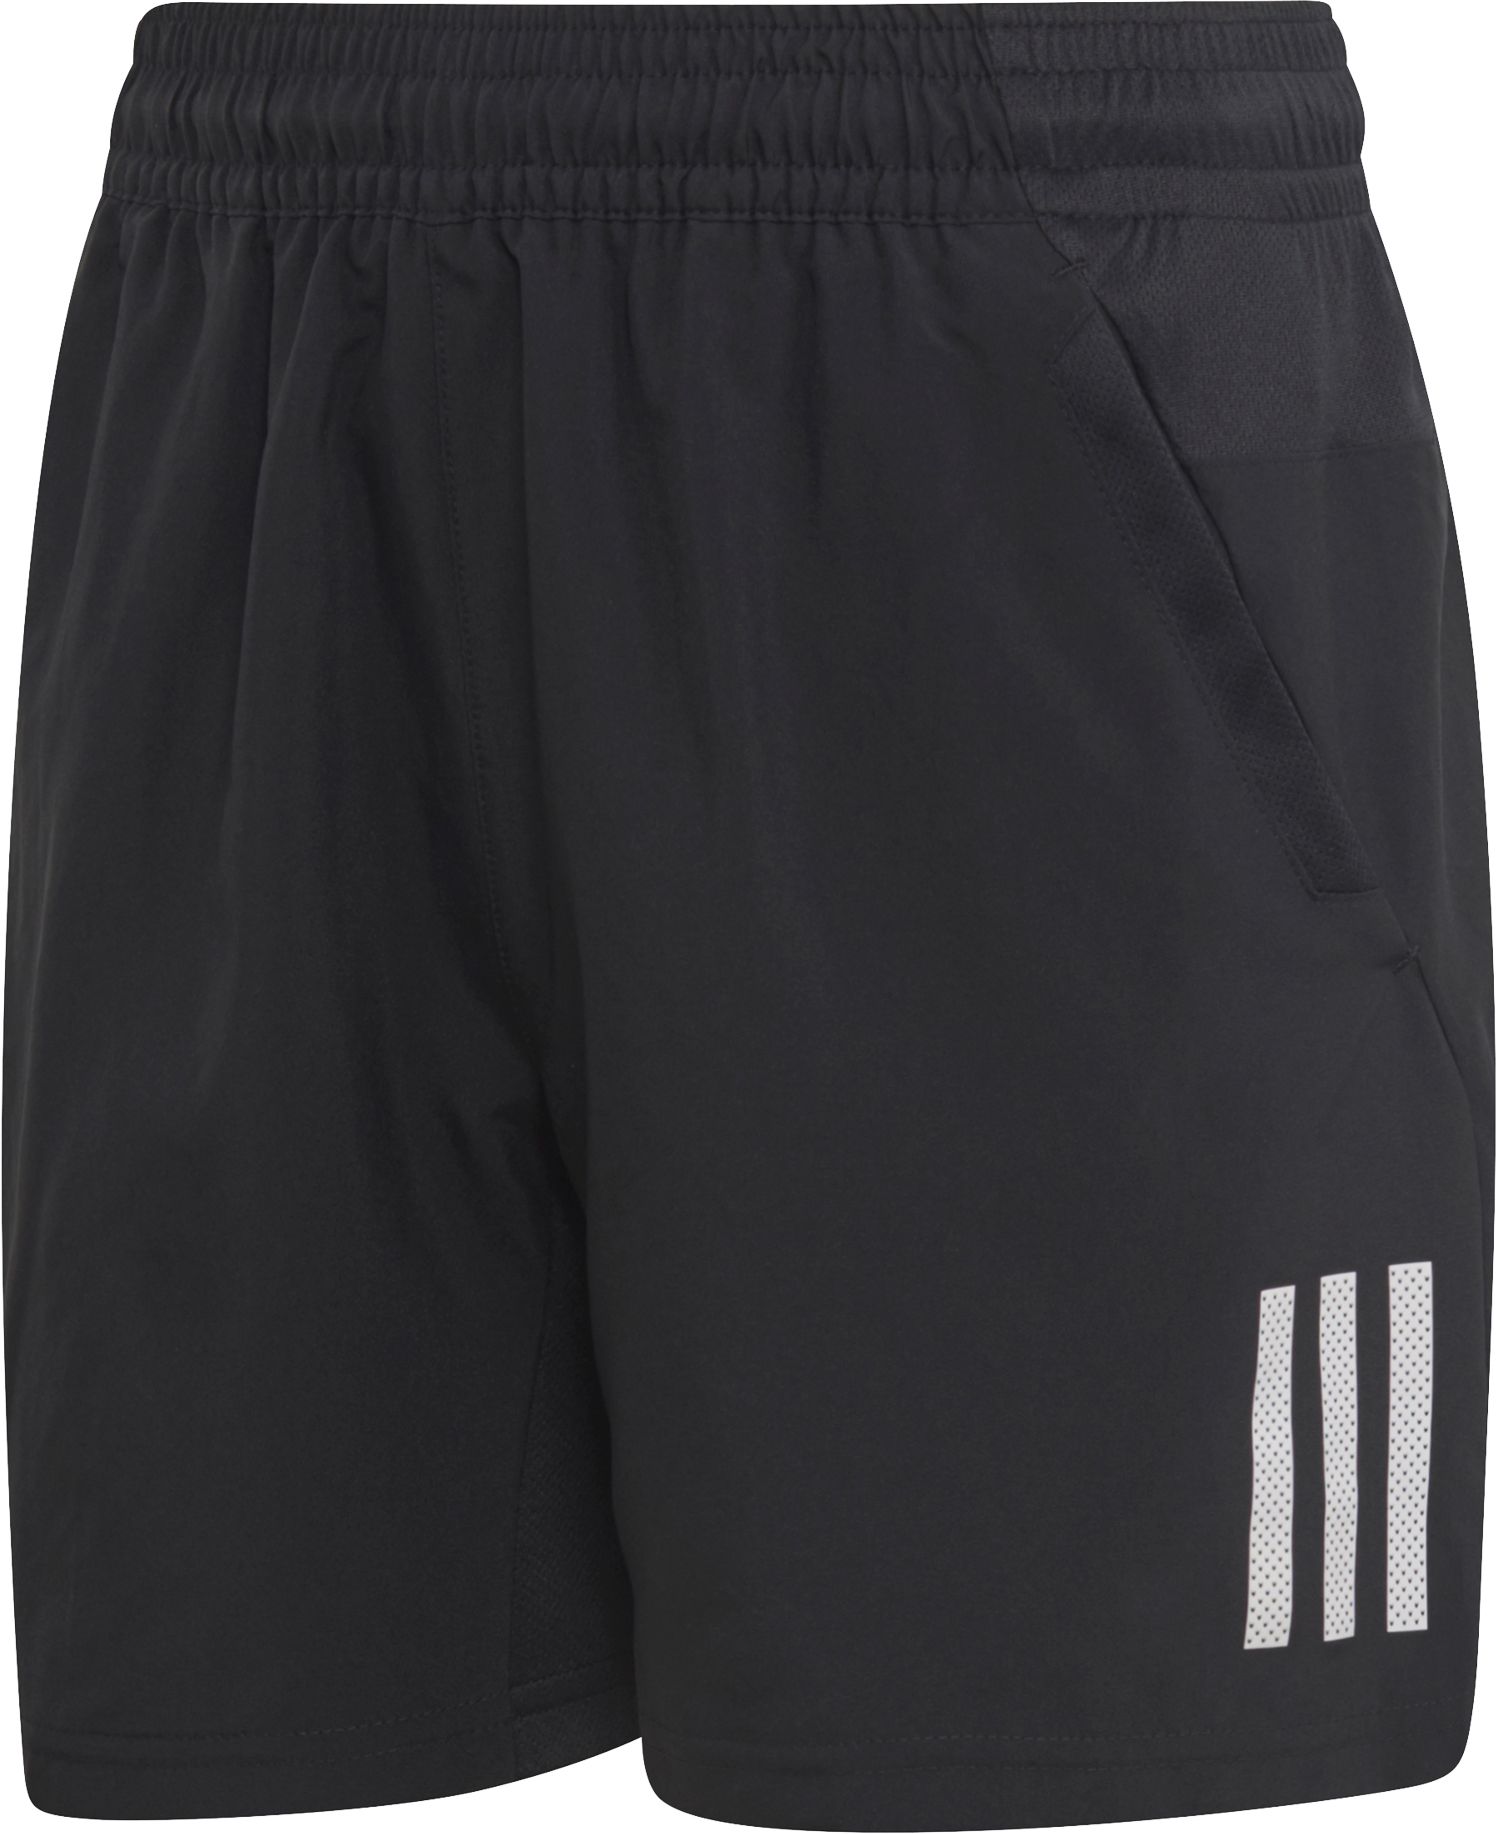 tennis shorts adidas